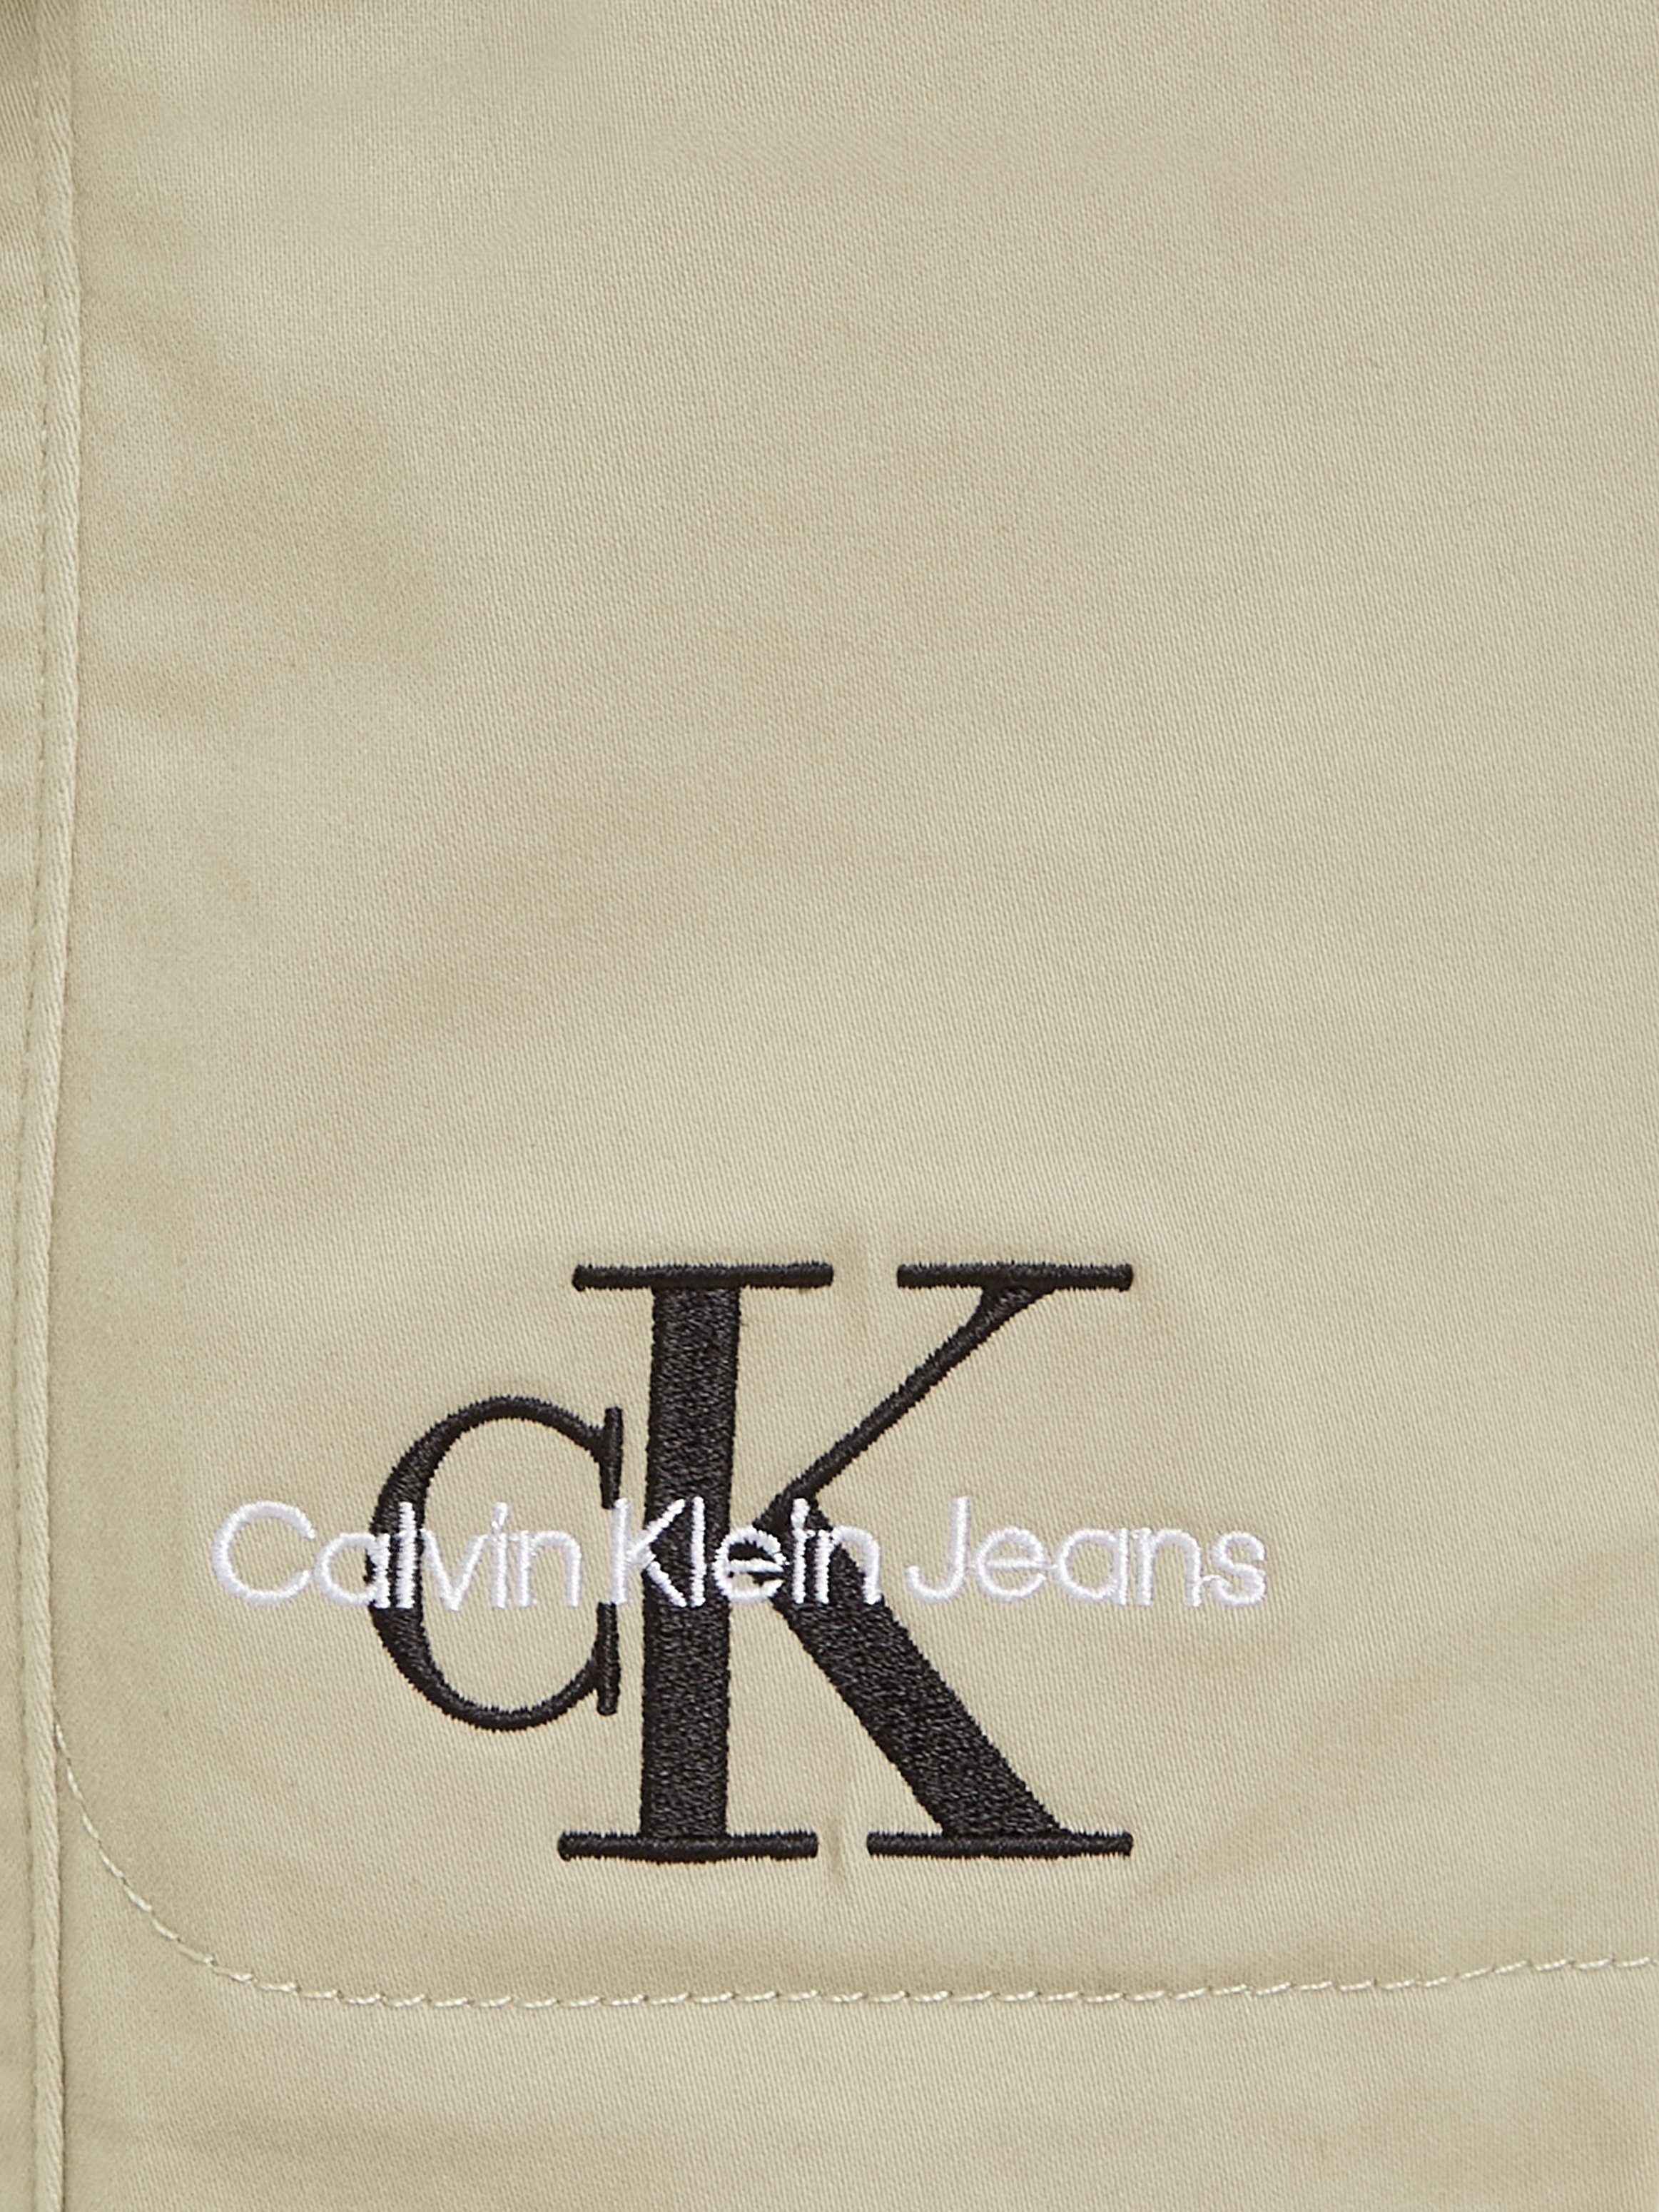 Calvin Klein Jeans Logoprägung Taupe CARGO mit Cargohose Plaza SATEEN PANTS